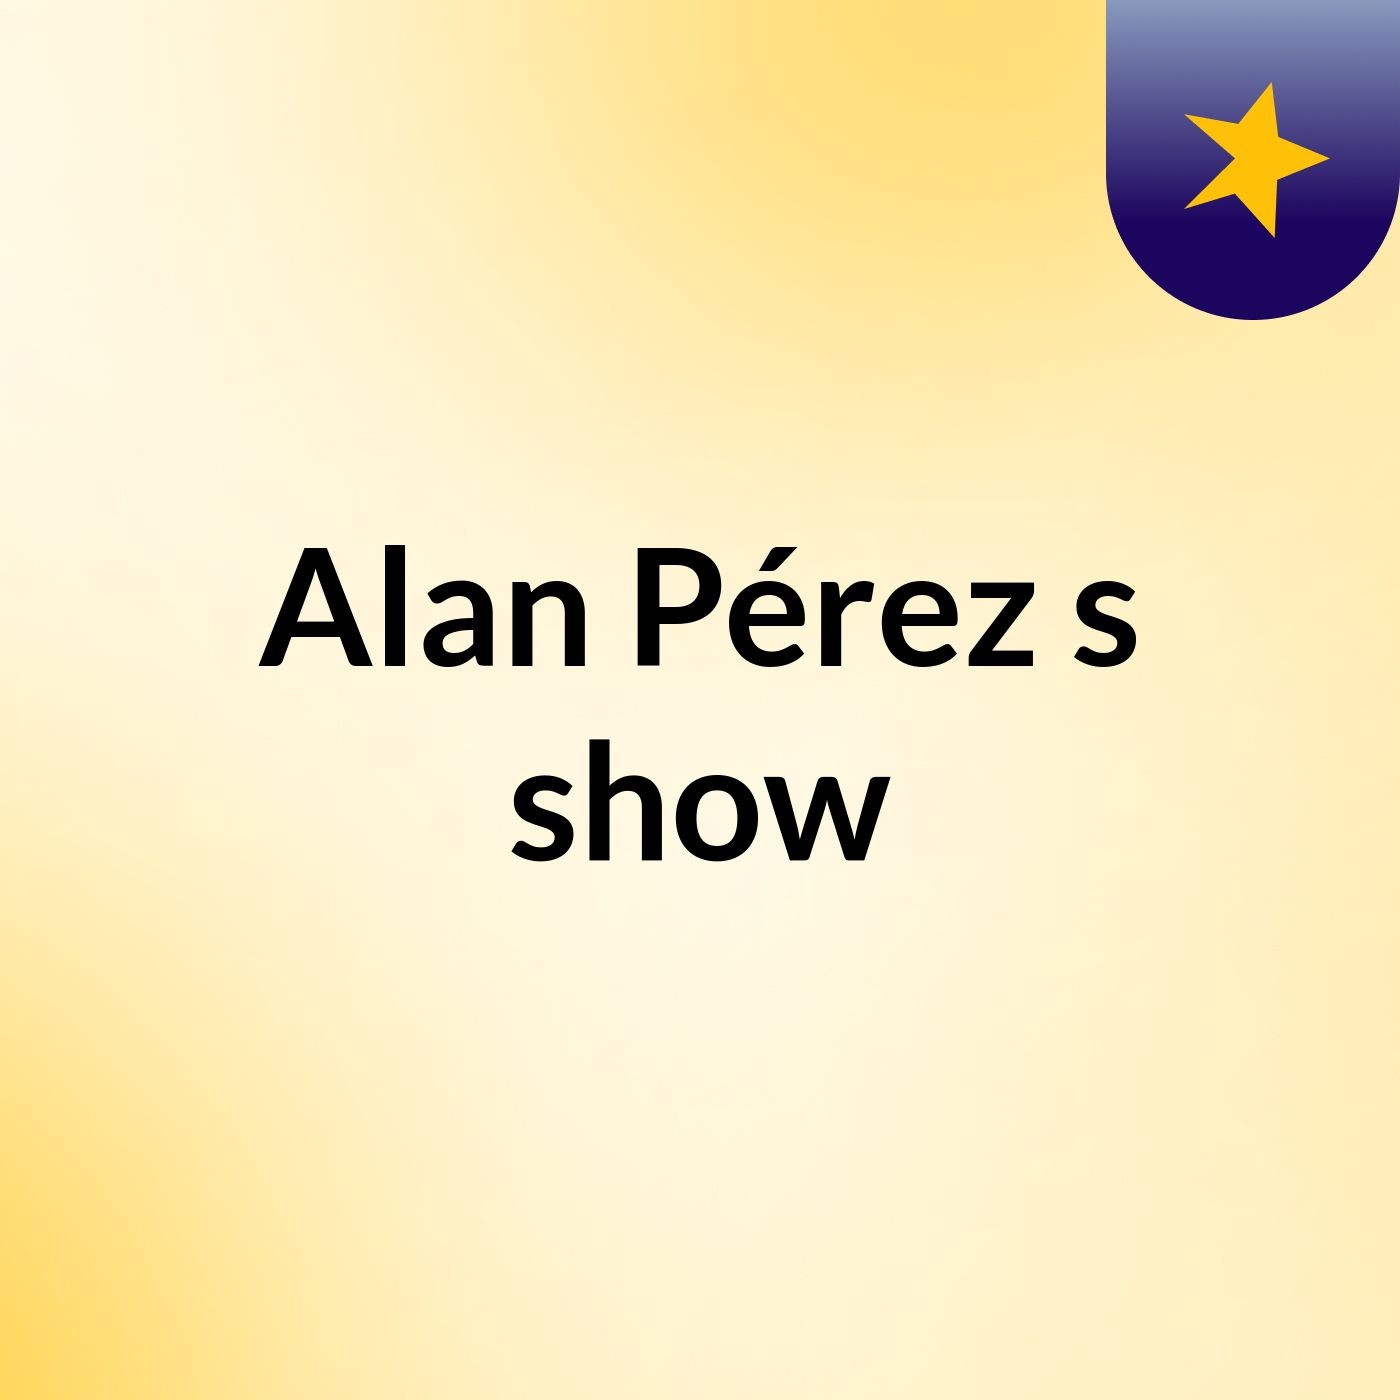 Alan Pérez's show